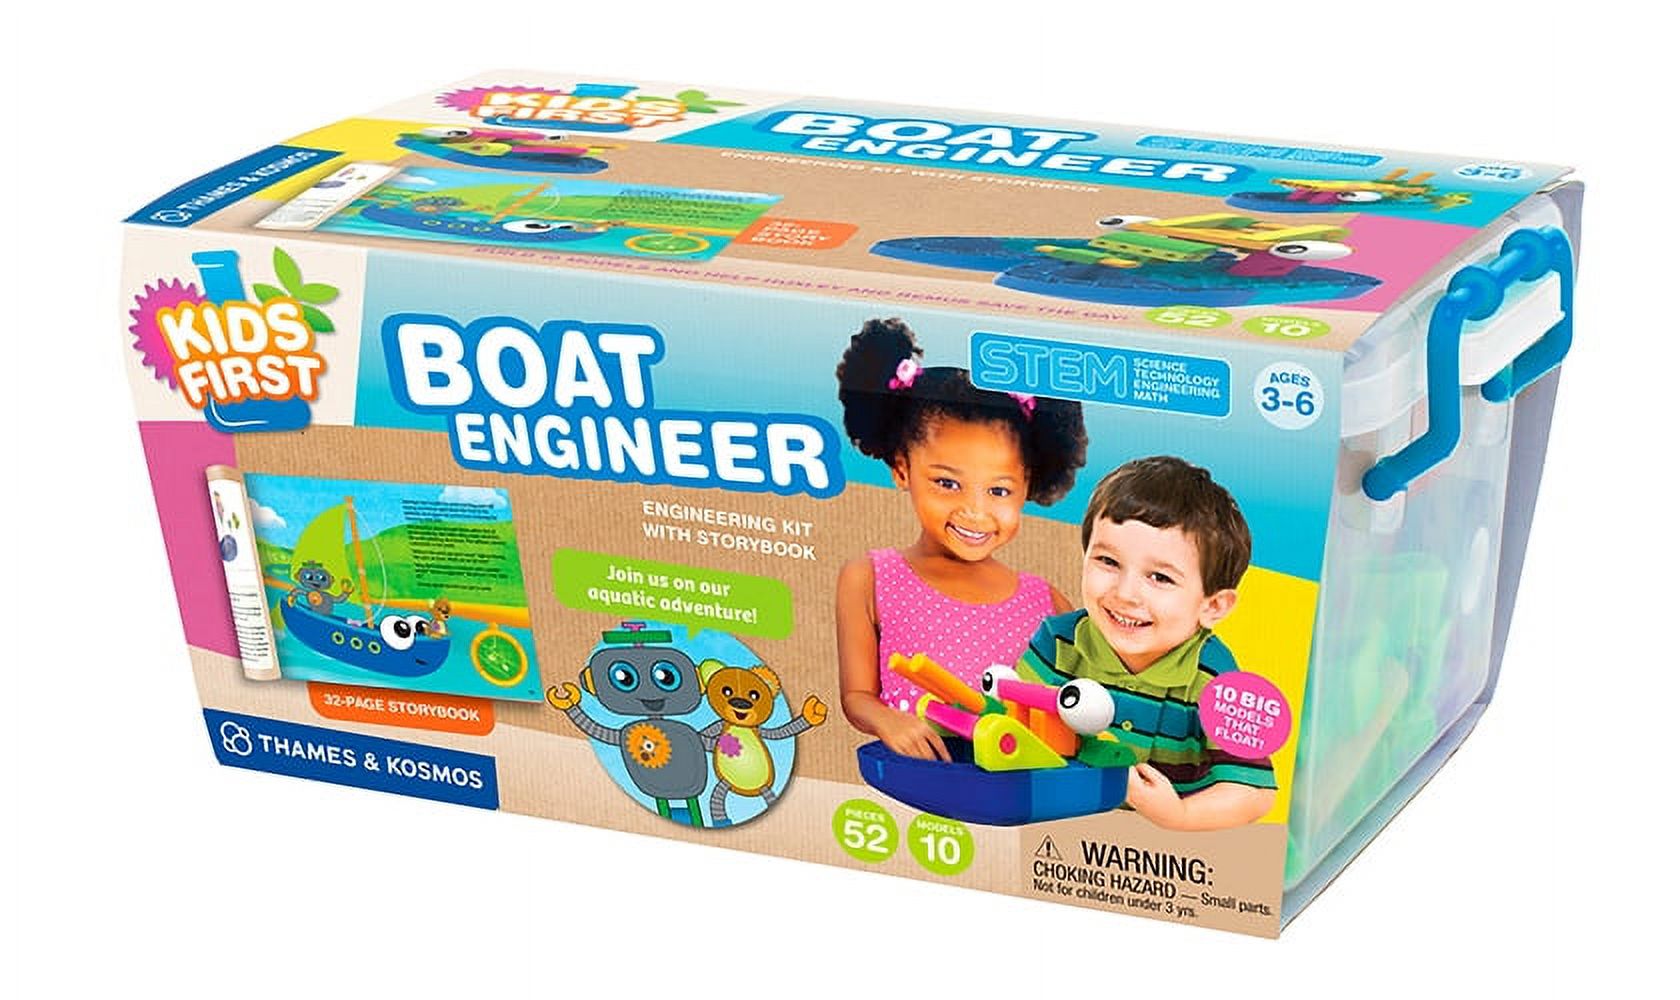 Thames & Kosmos Kids First Boat Engineer Stem Toy - image 1 of 7